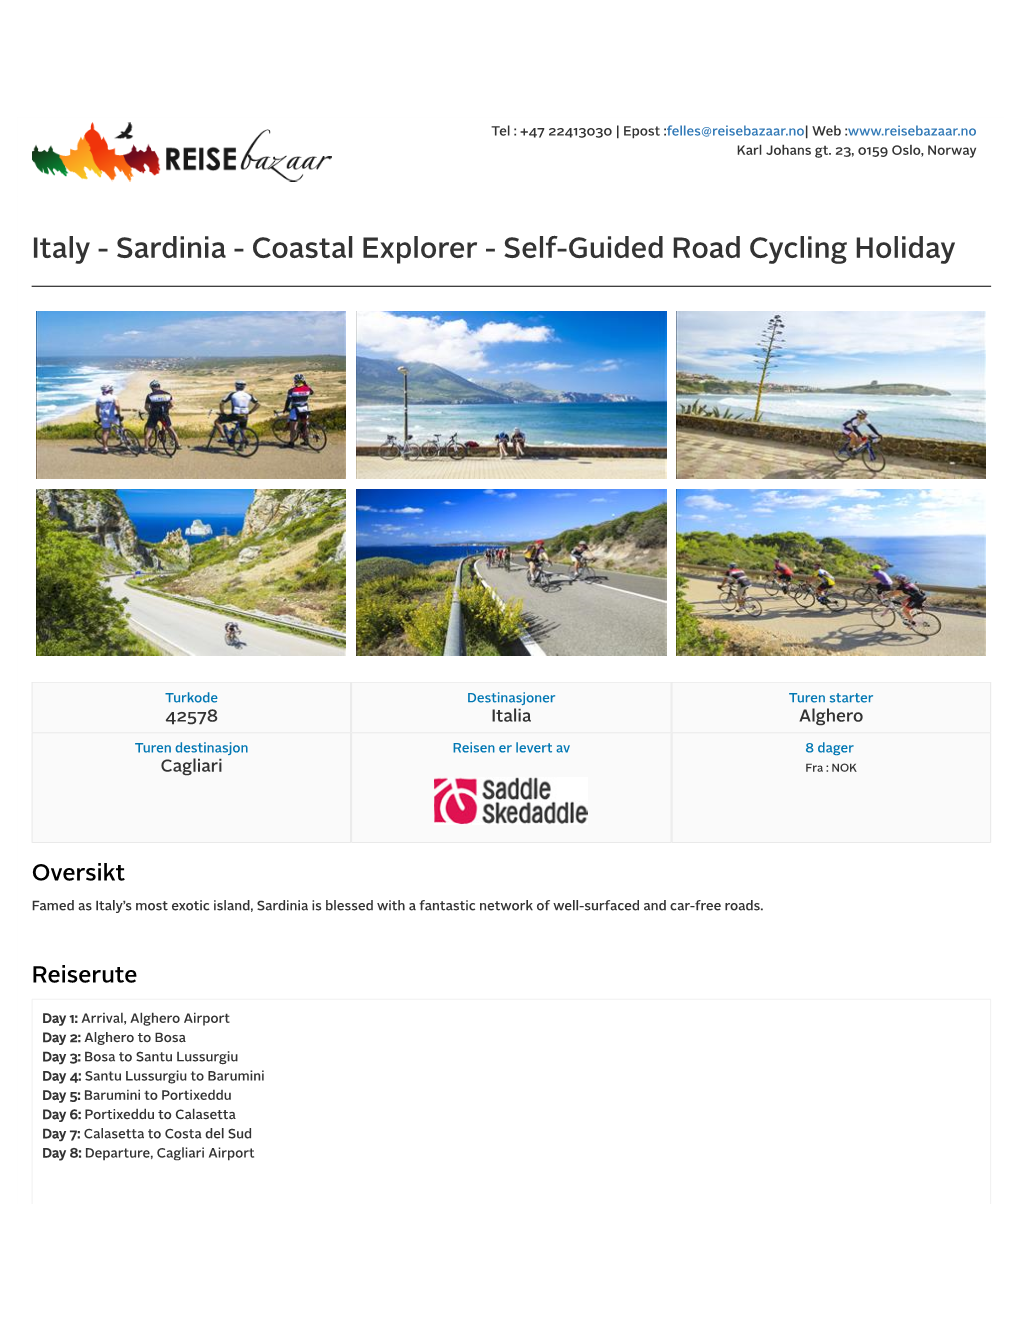 Sardinia - Coastal Explorer - Self-Guided Road Cycling Holiday